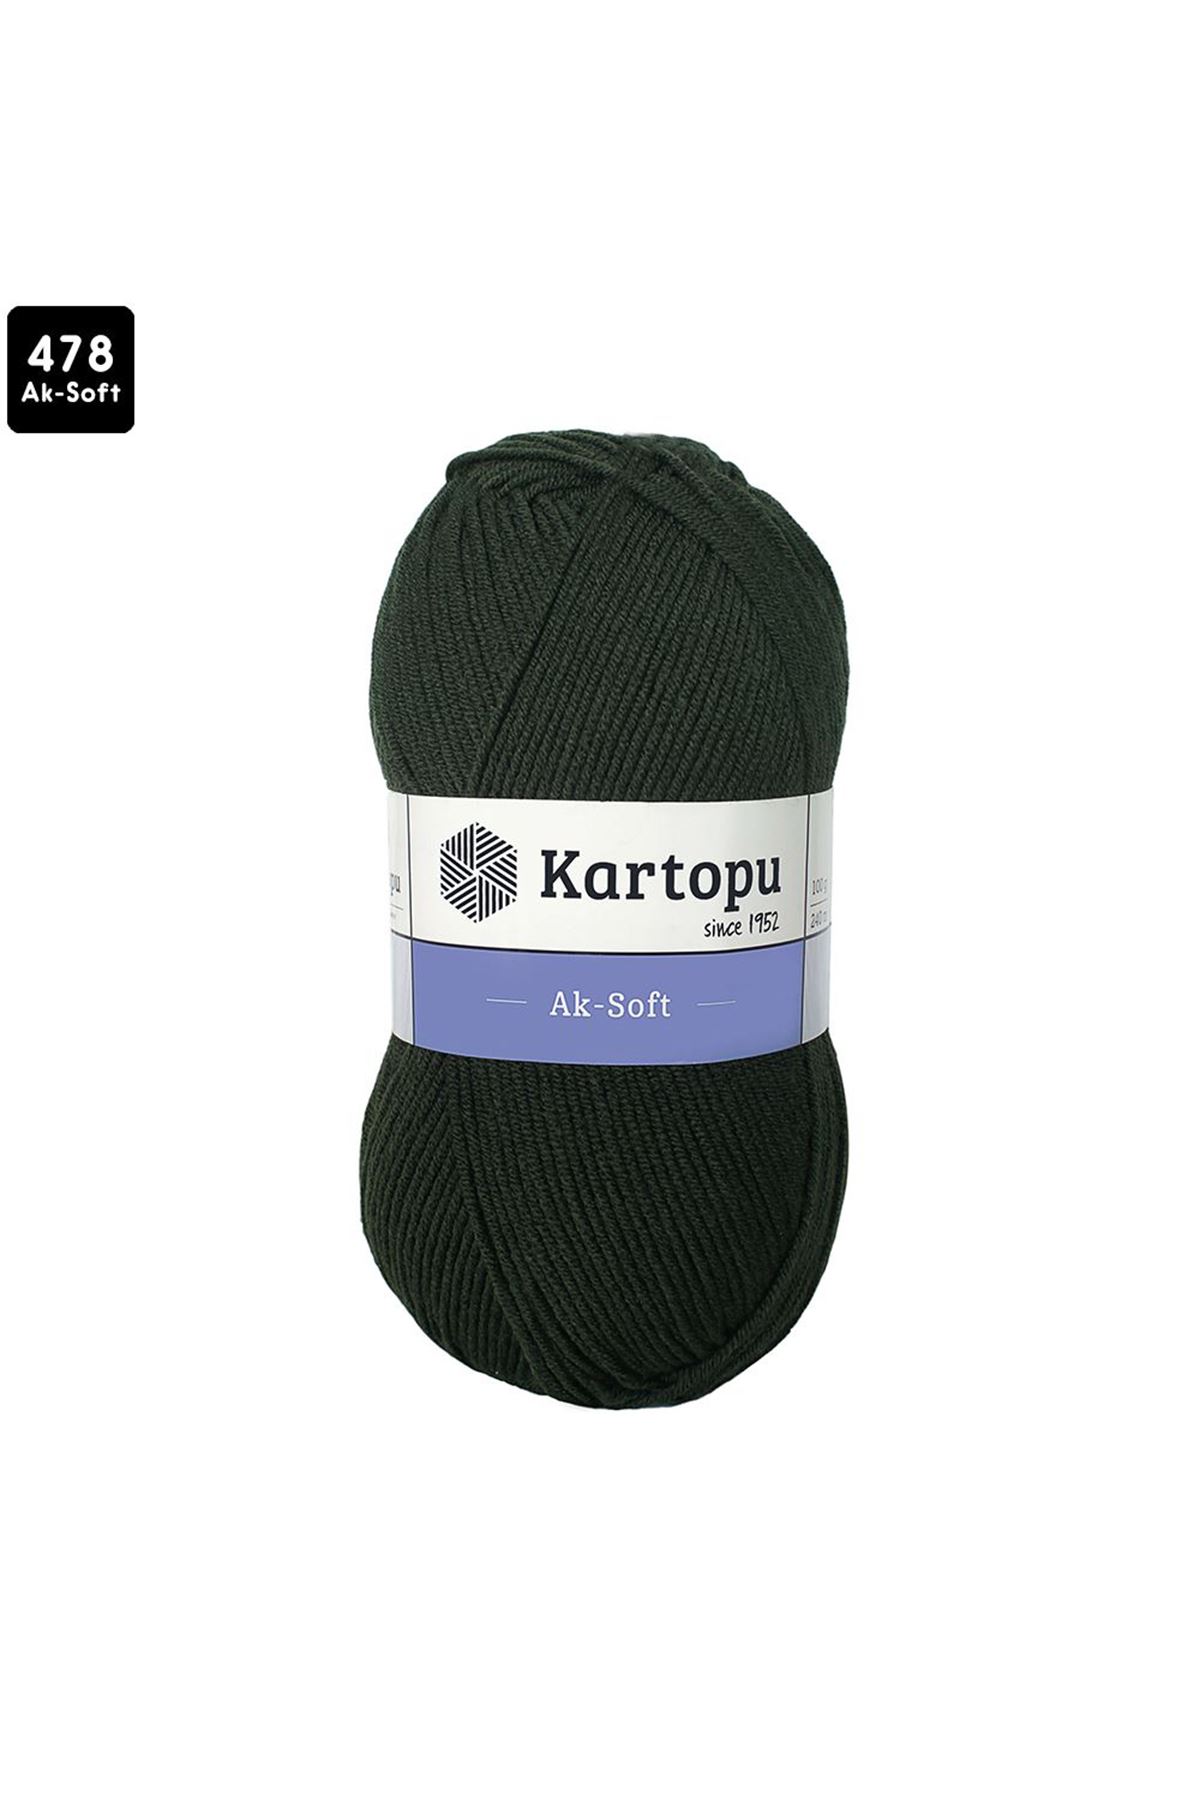 Kartopu Ak-Soft Renk No:478